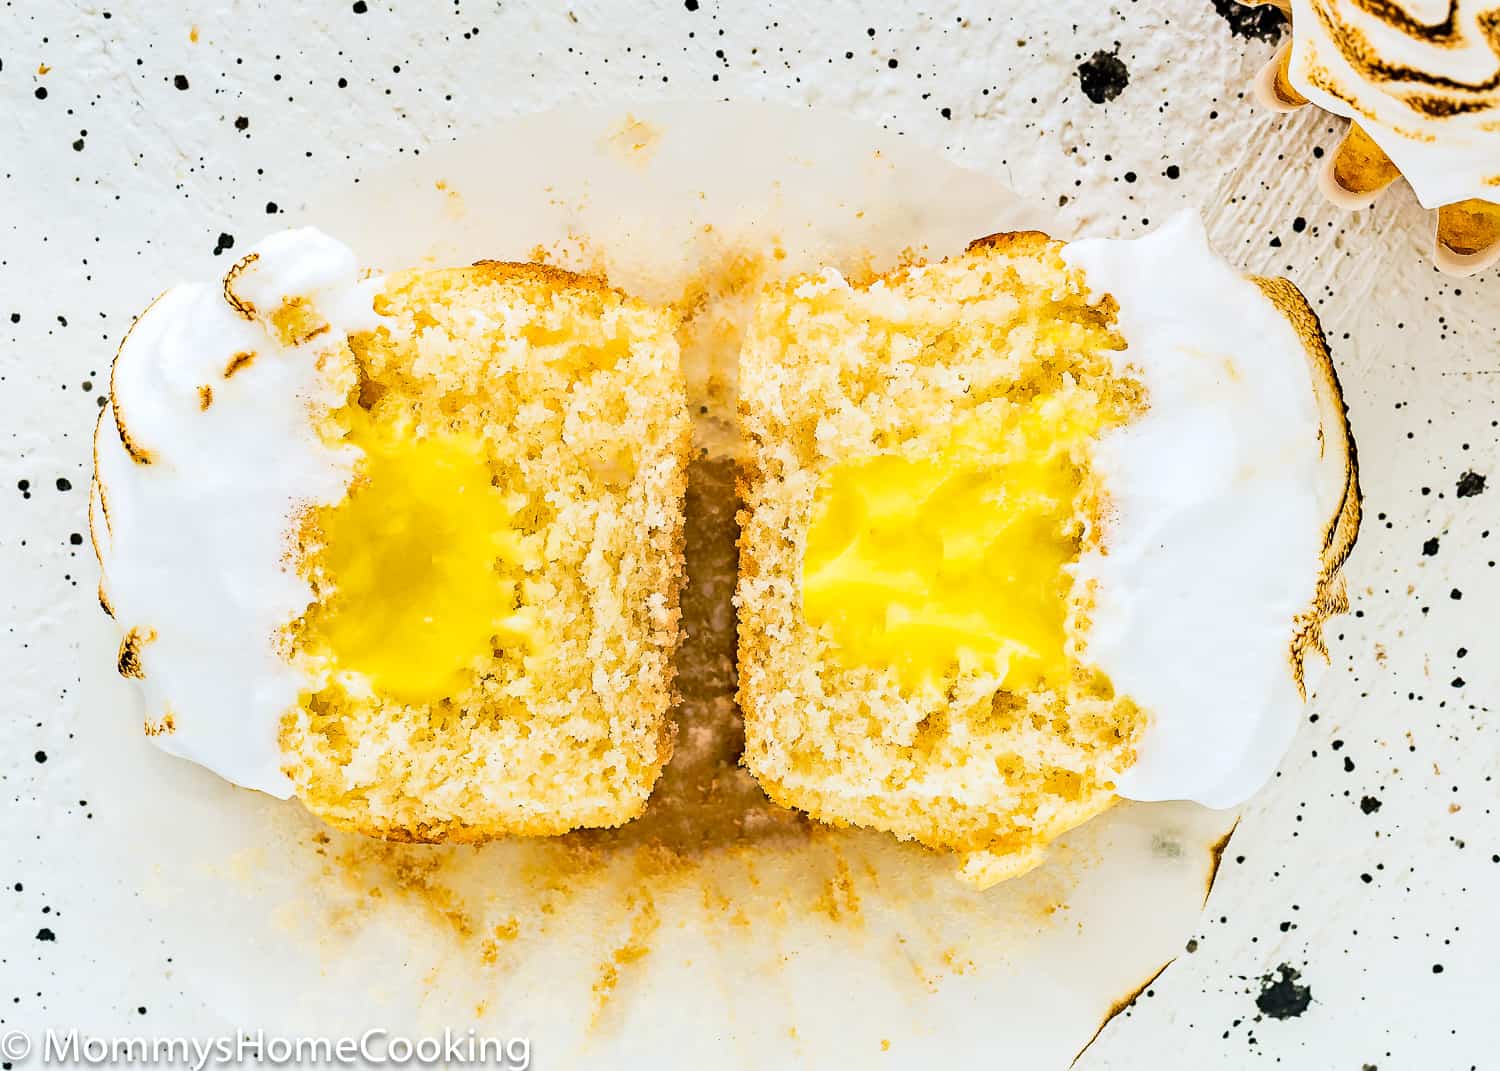 Eggless Lemon Meringue Cupcake open in half showing its inside texture.